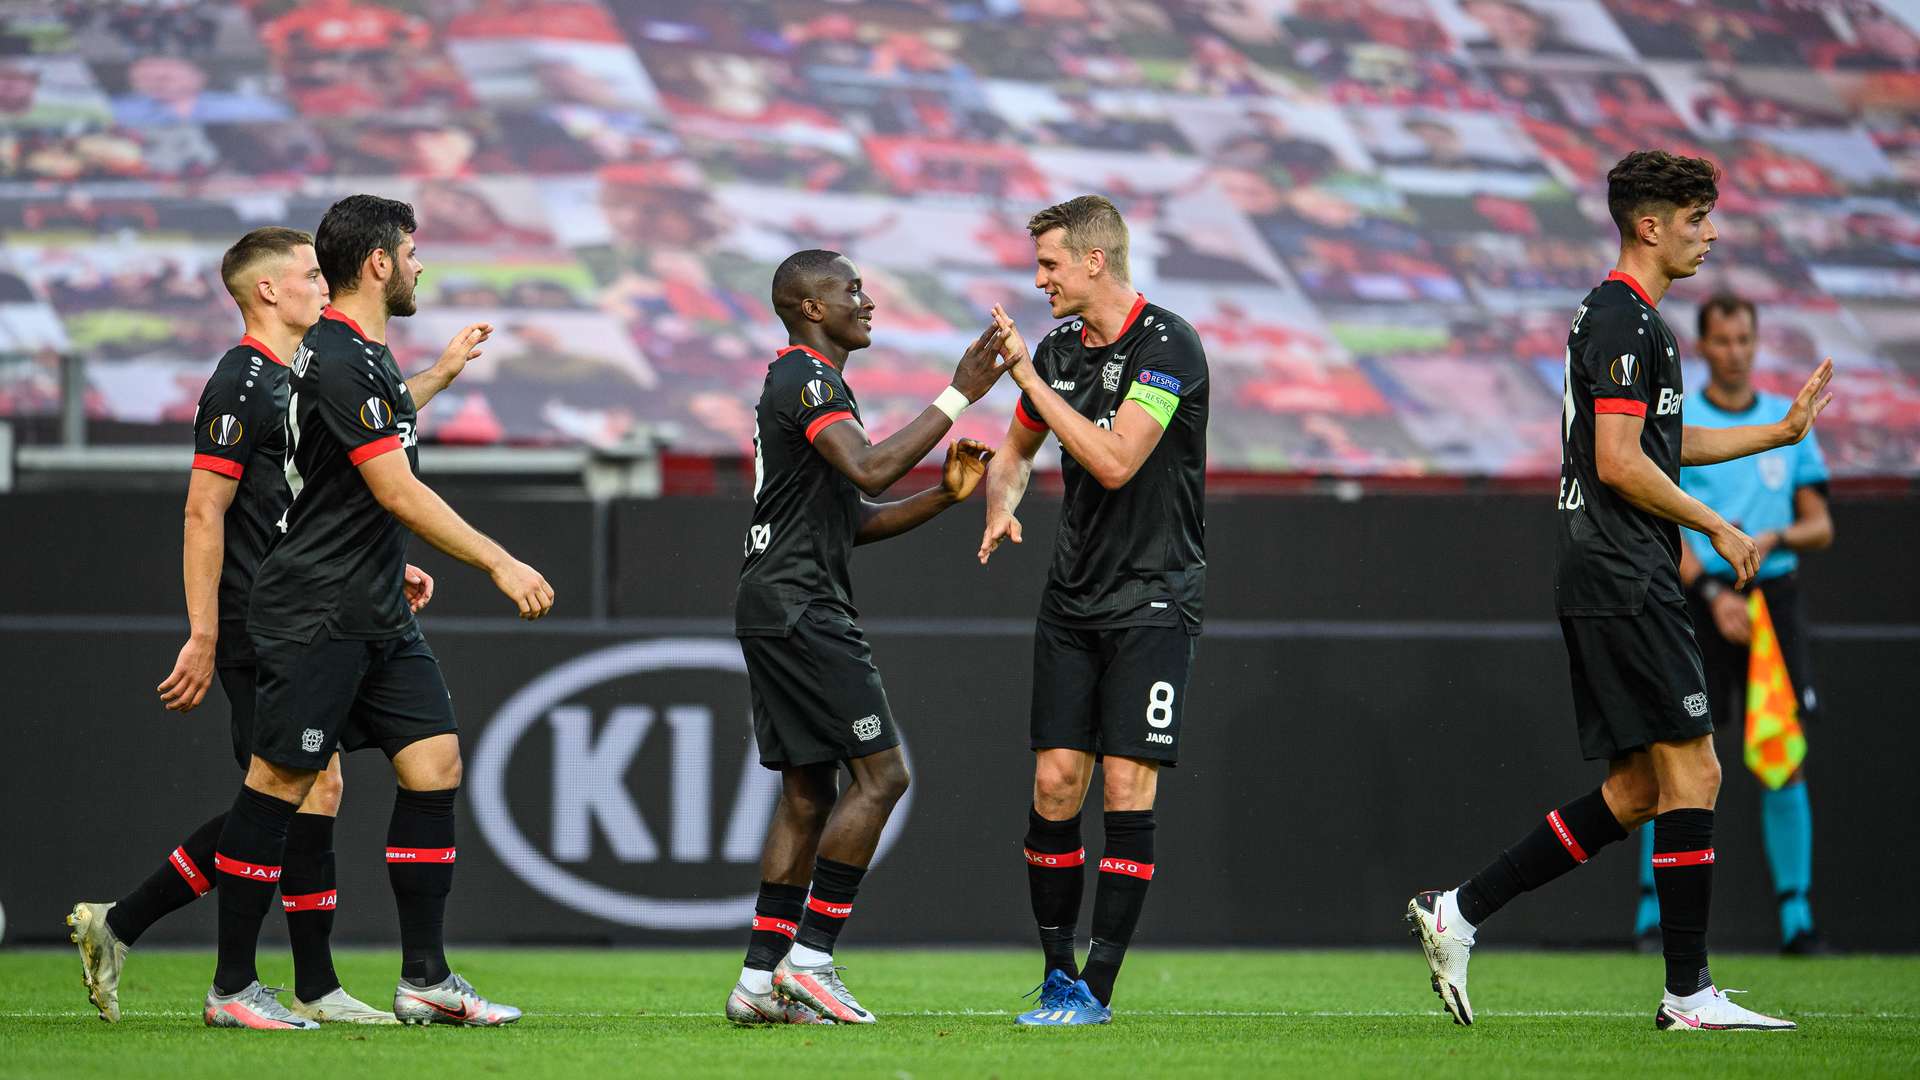 Jugadores del Bayer Leverkusen celebrando un gol. Fuente: <a href="https://twitter.com/bayer04_en/status/1291485171049472000?s=20">@bayer04_en</a>